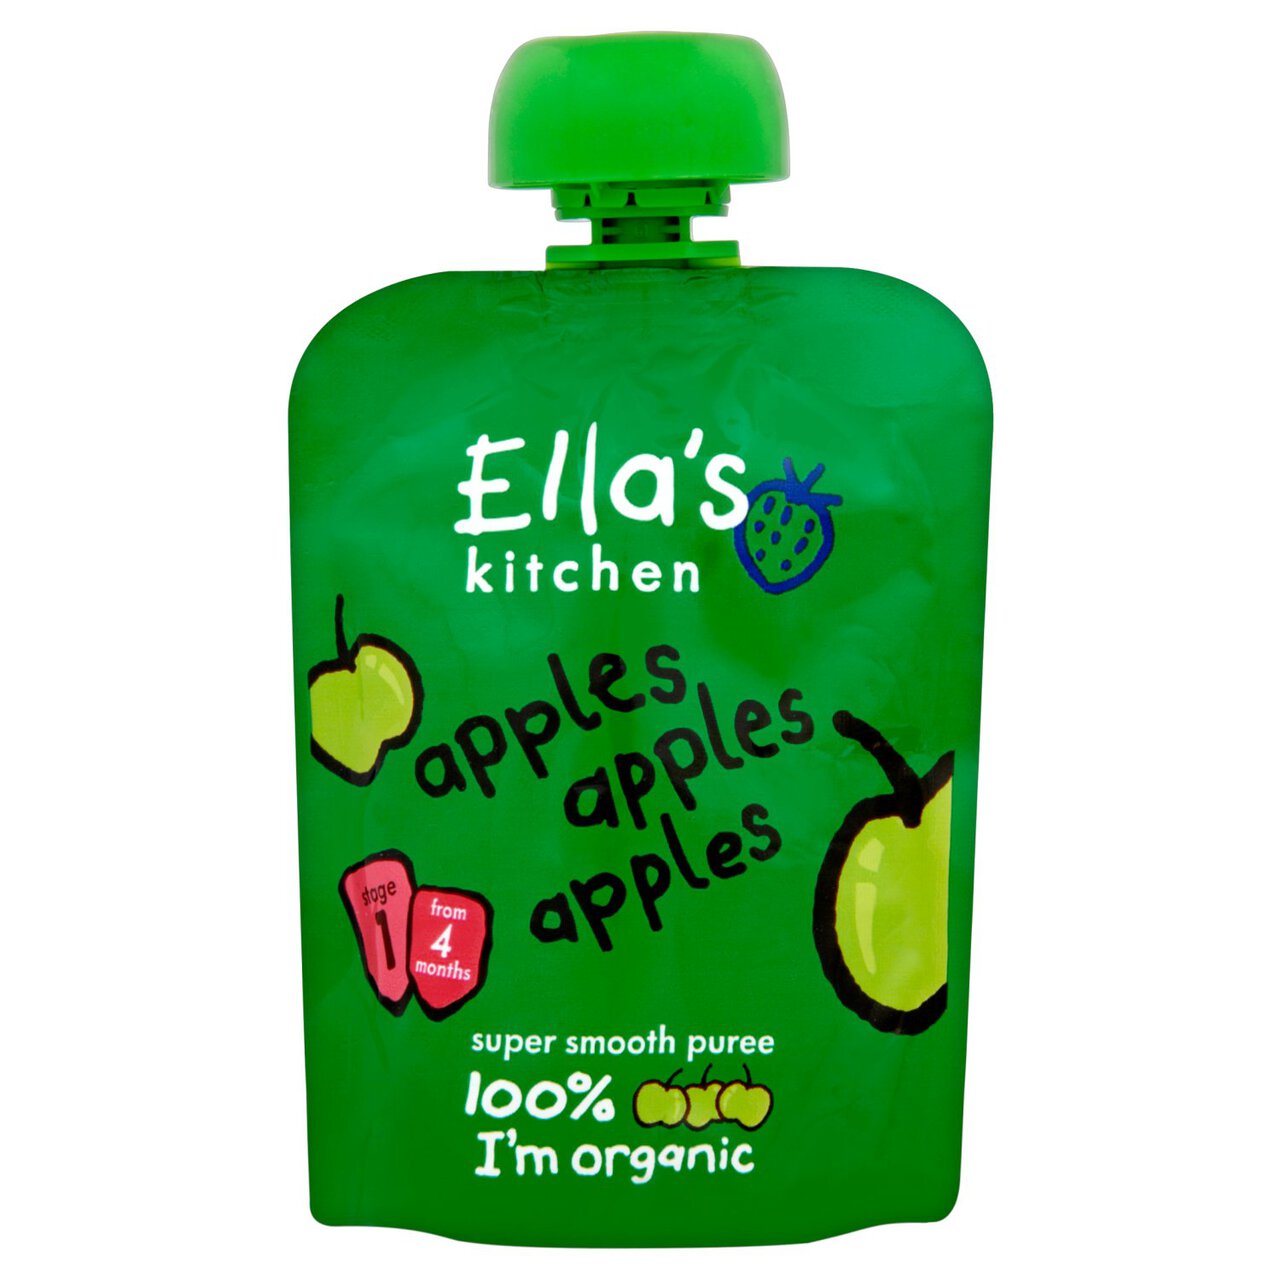 Ella's Kitchen Apples Organic Single Fruit Pouch, 4 mths+ 70g